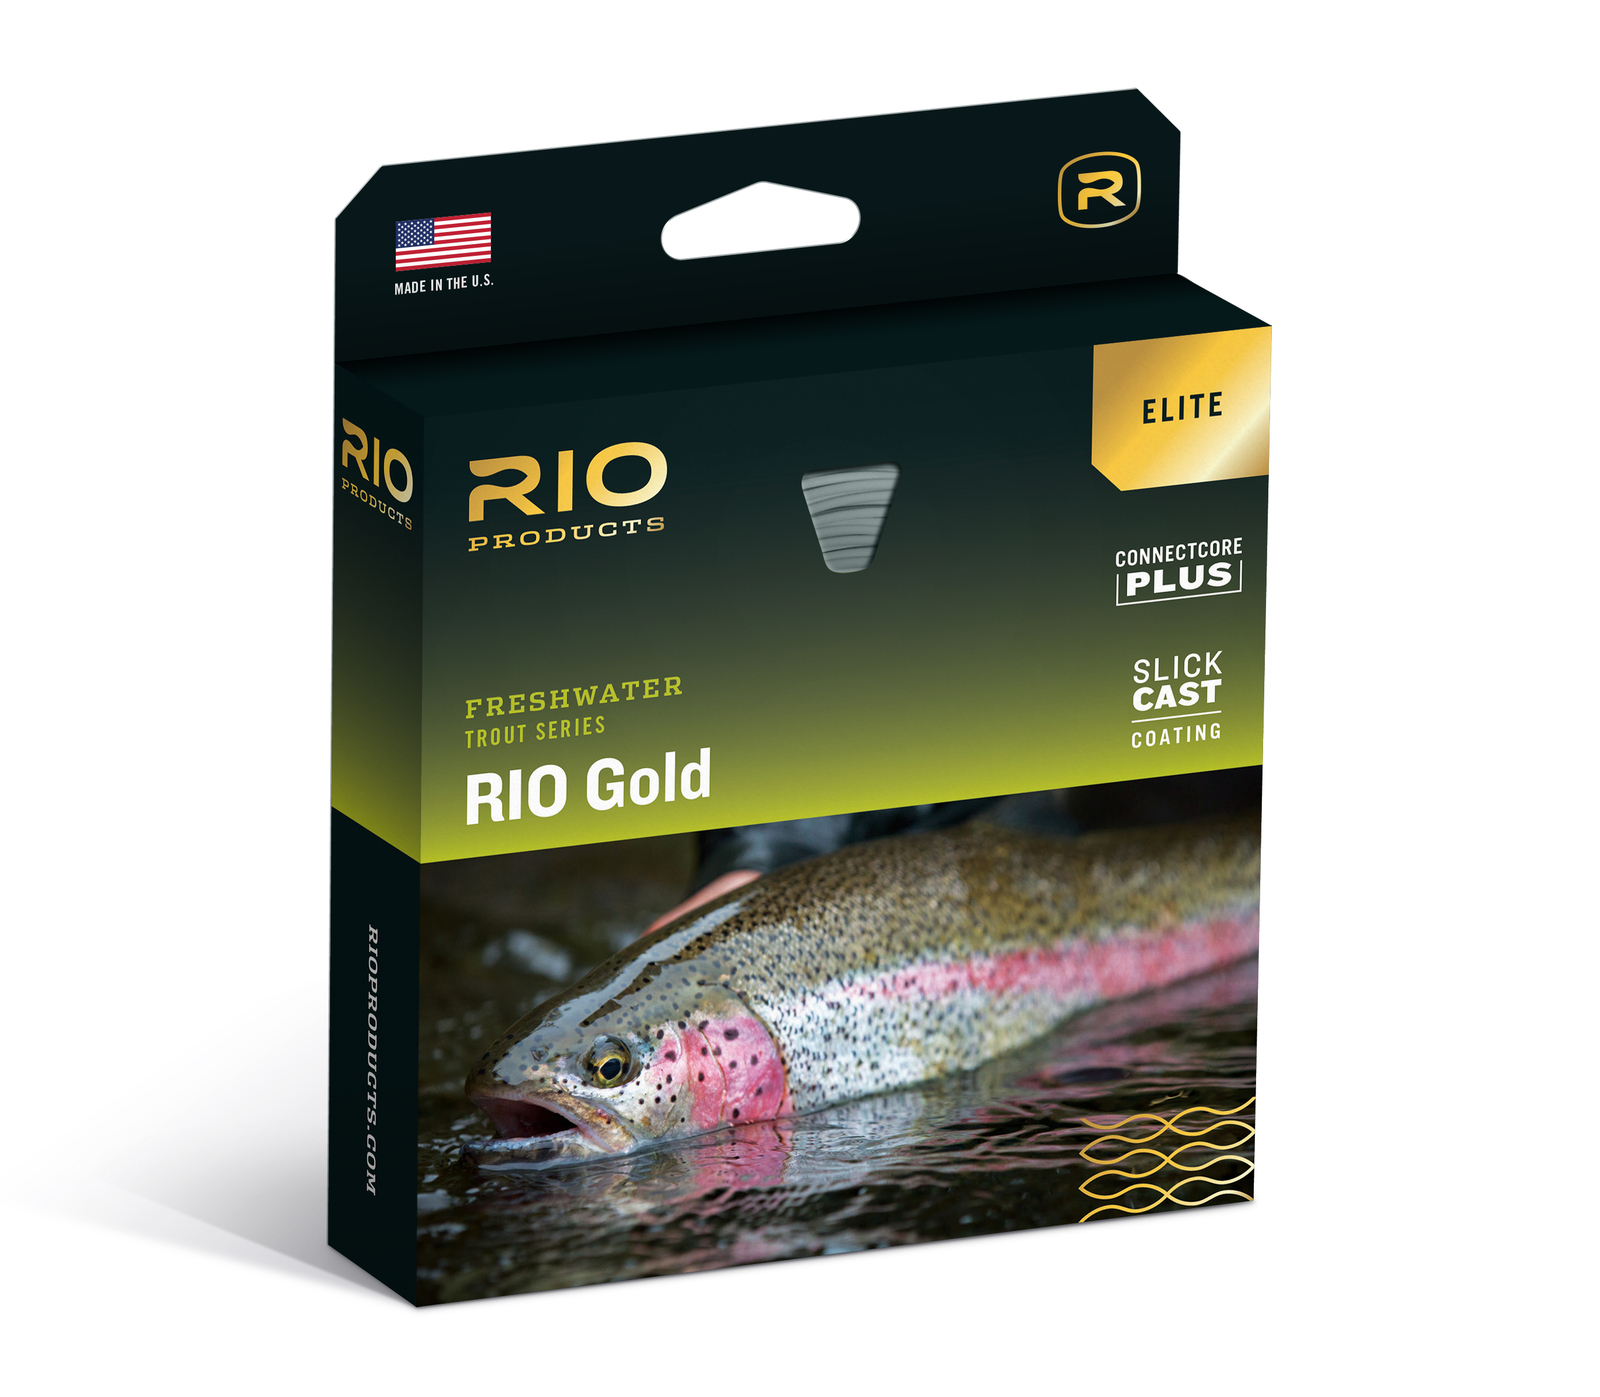 Rio Freshwater Trout Series Elite Rio Gold Fly Line